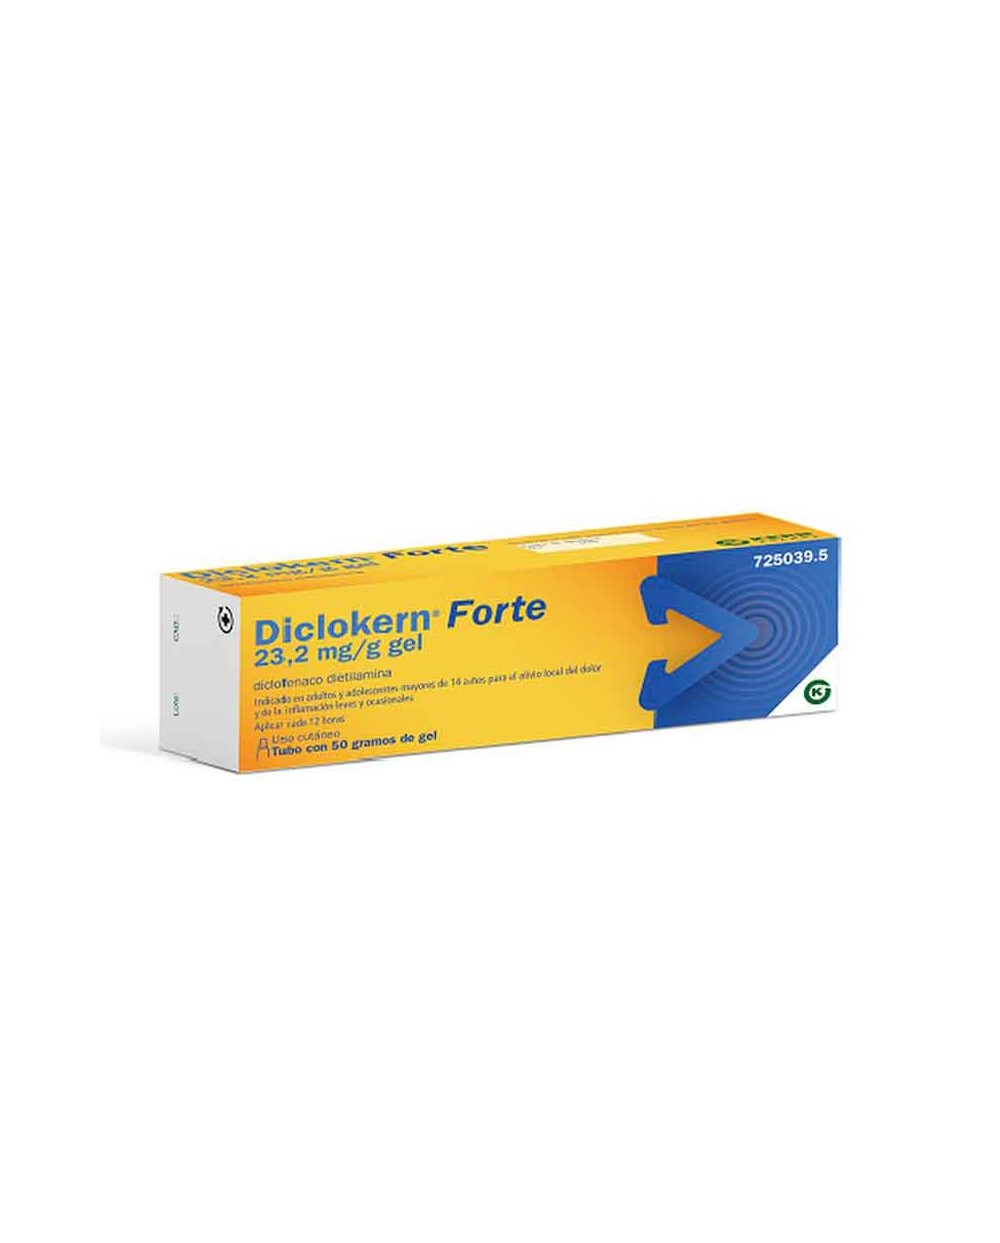 Diclokern Forte 23.2 MG/G Gel Tópico 50g